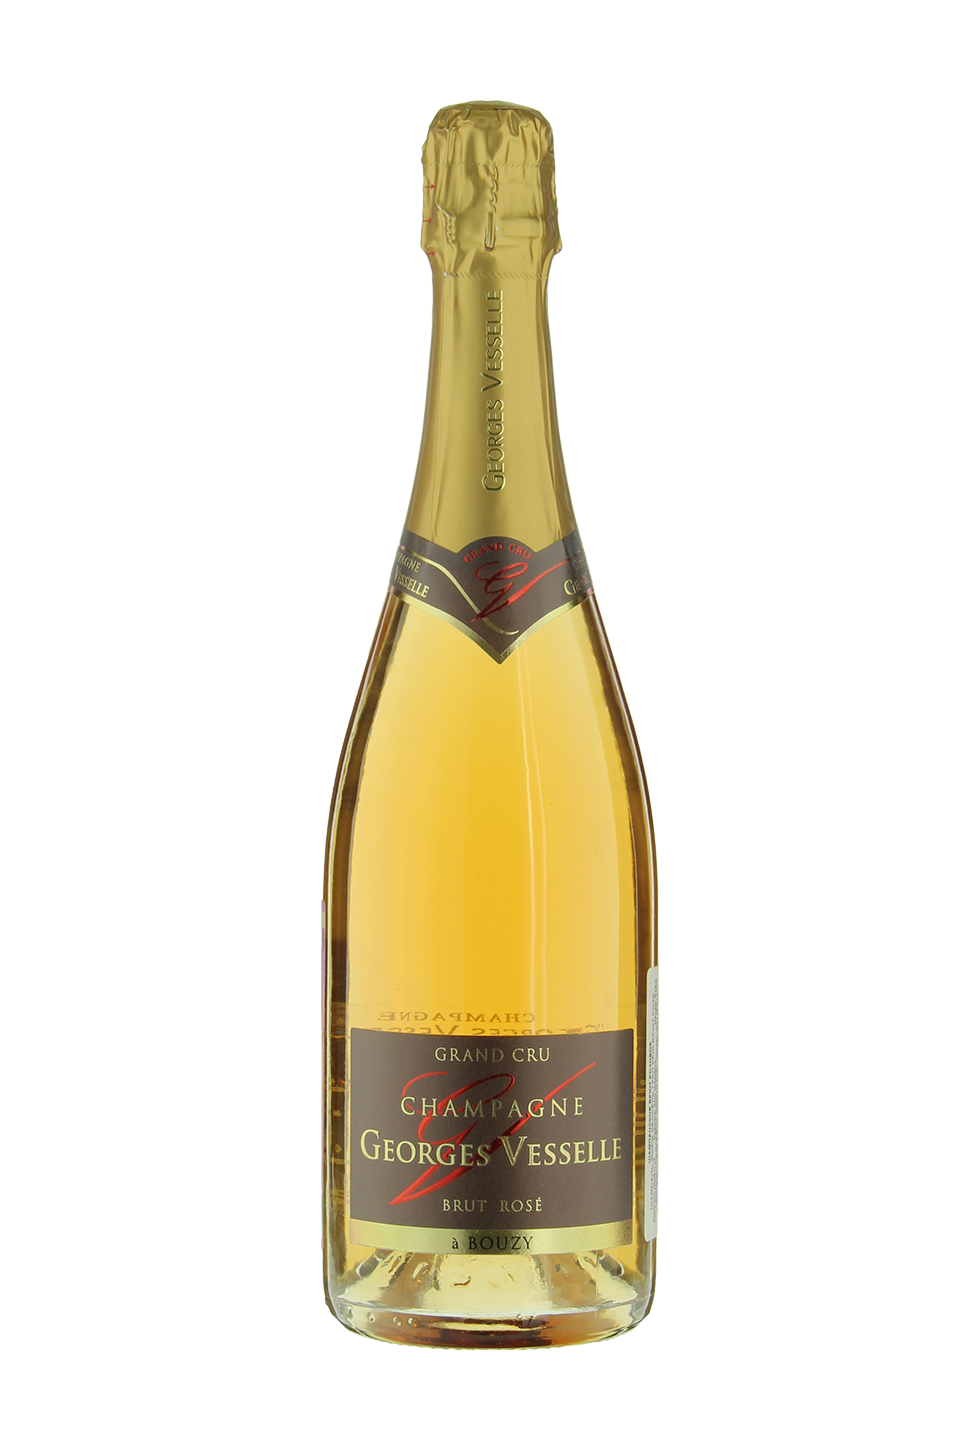 Georges Vesselle Brut Rose Grand Cru Champagne